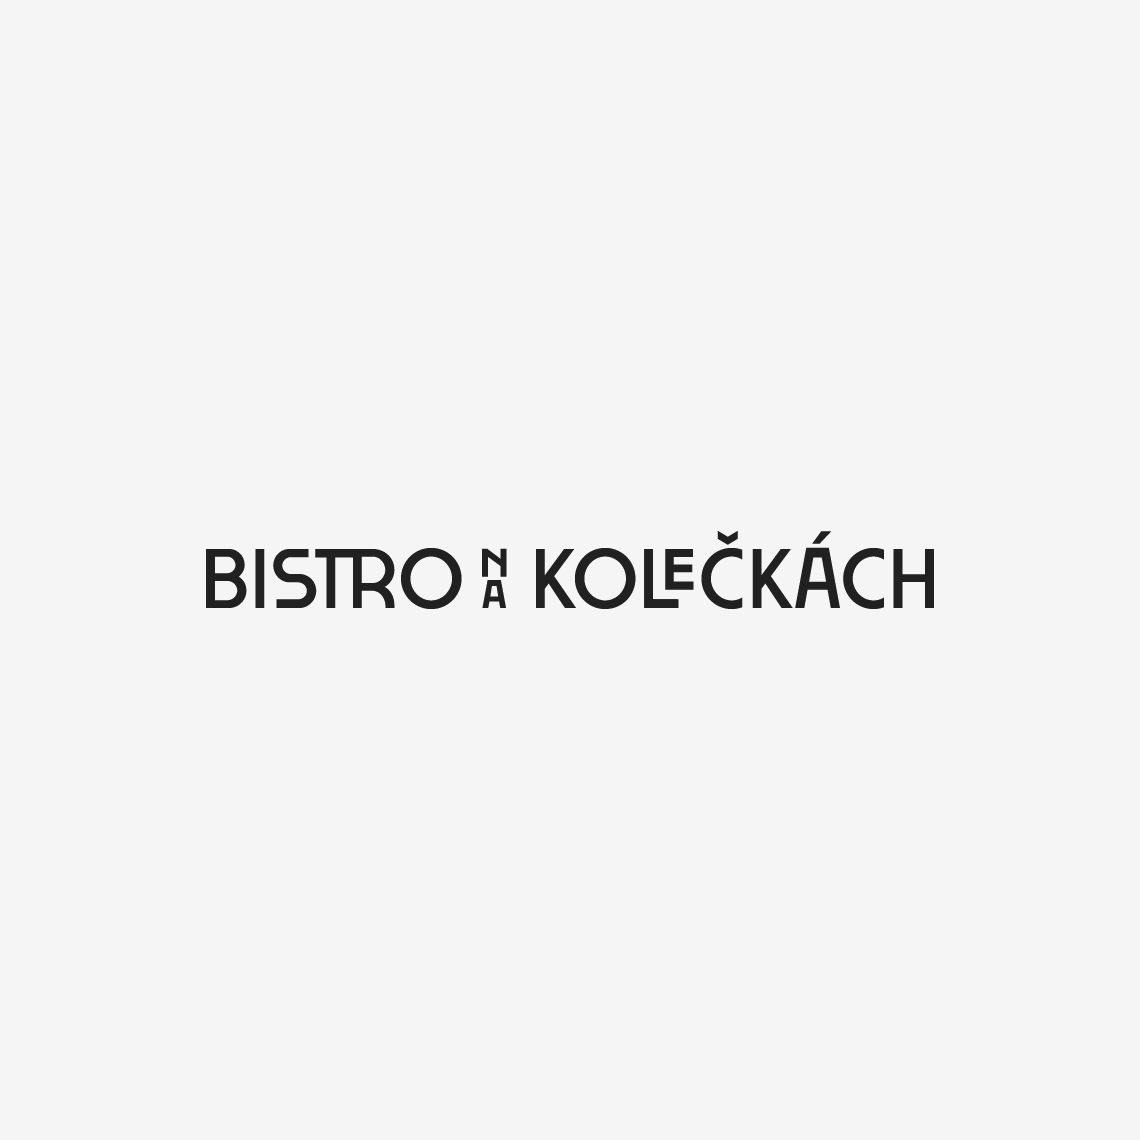 Logo-Bistro